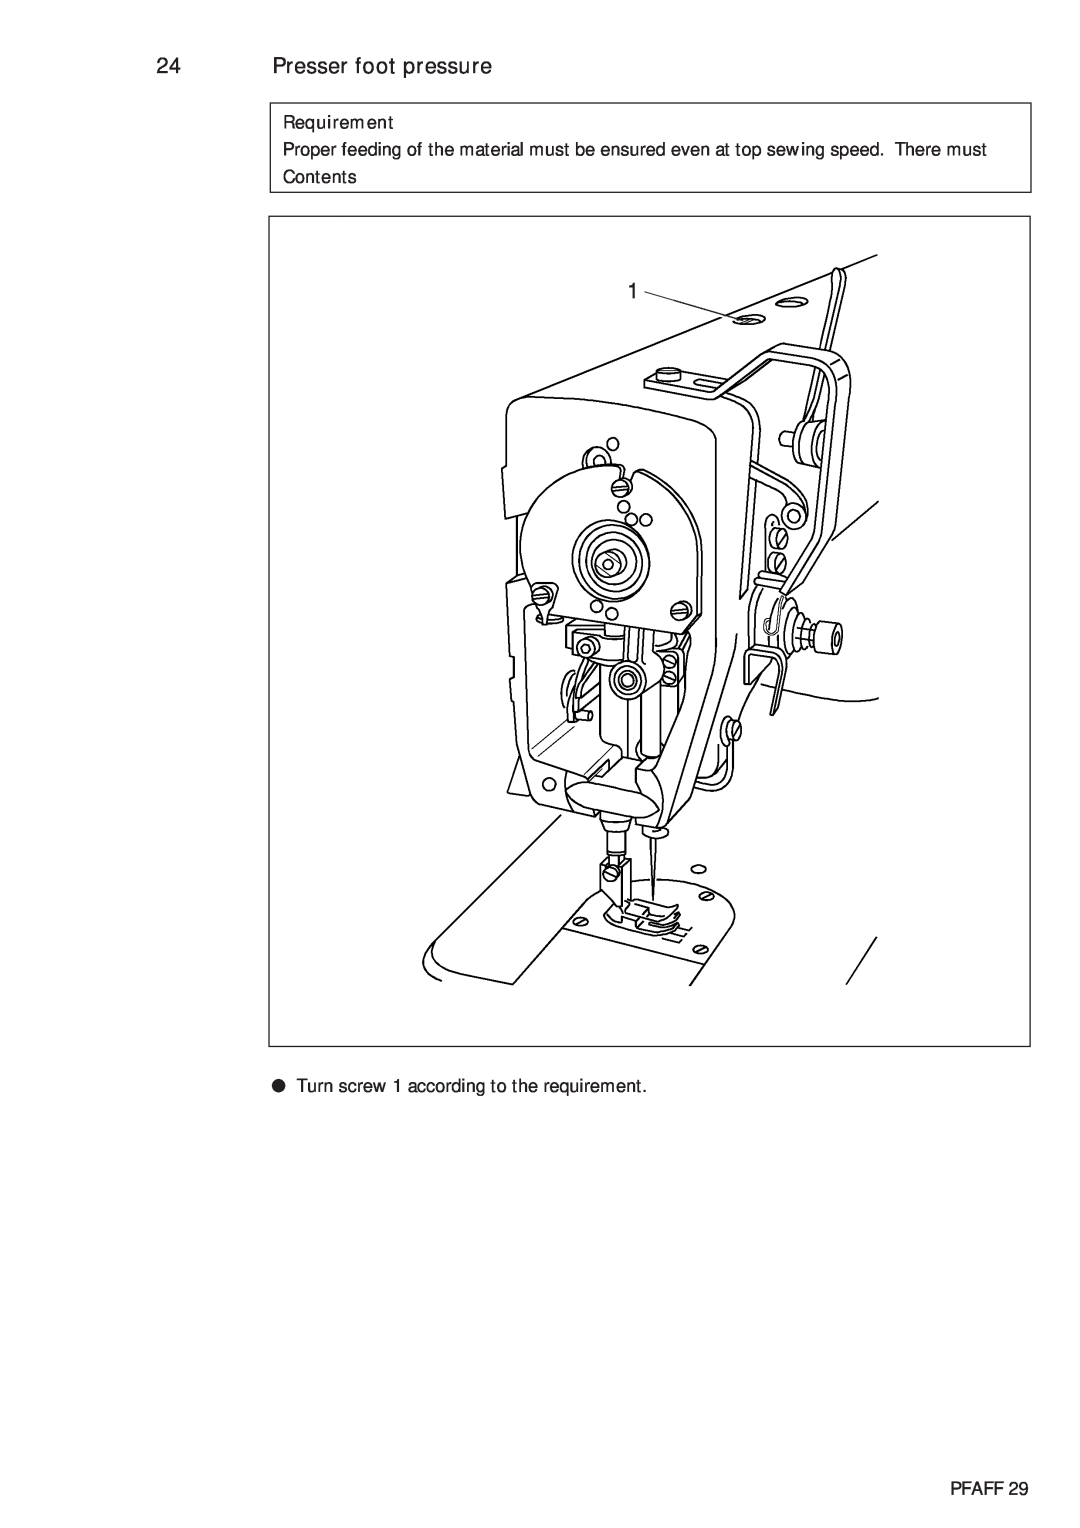 Pfaff 483, 481 service manual Presser foot pressure, Requirement, Turn screw 1 according to the requirement, Pfaff 